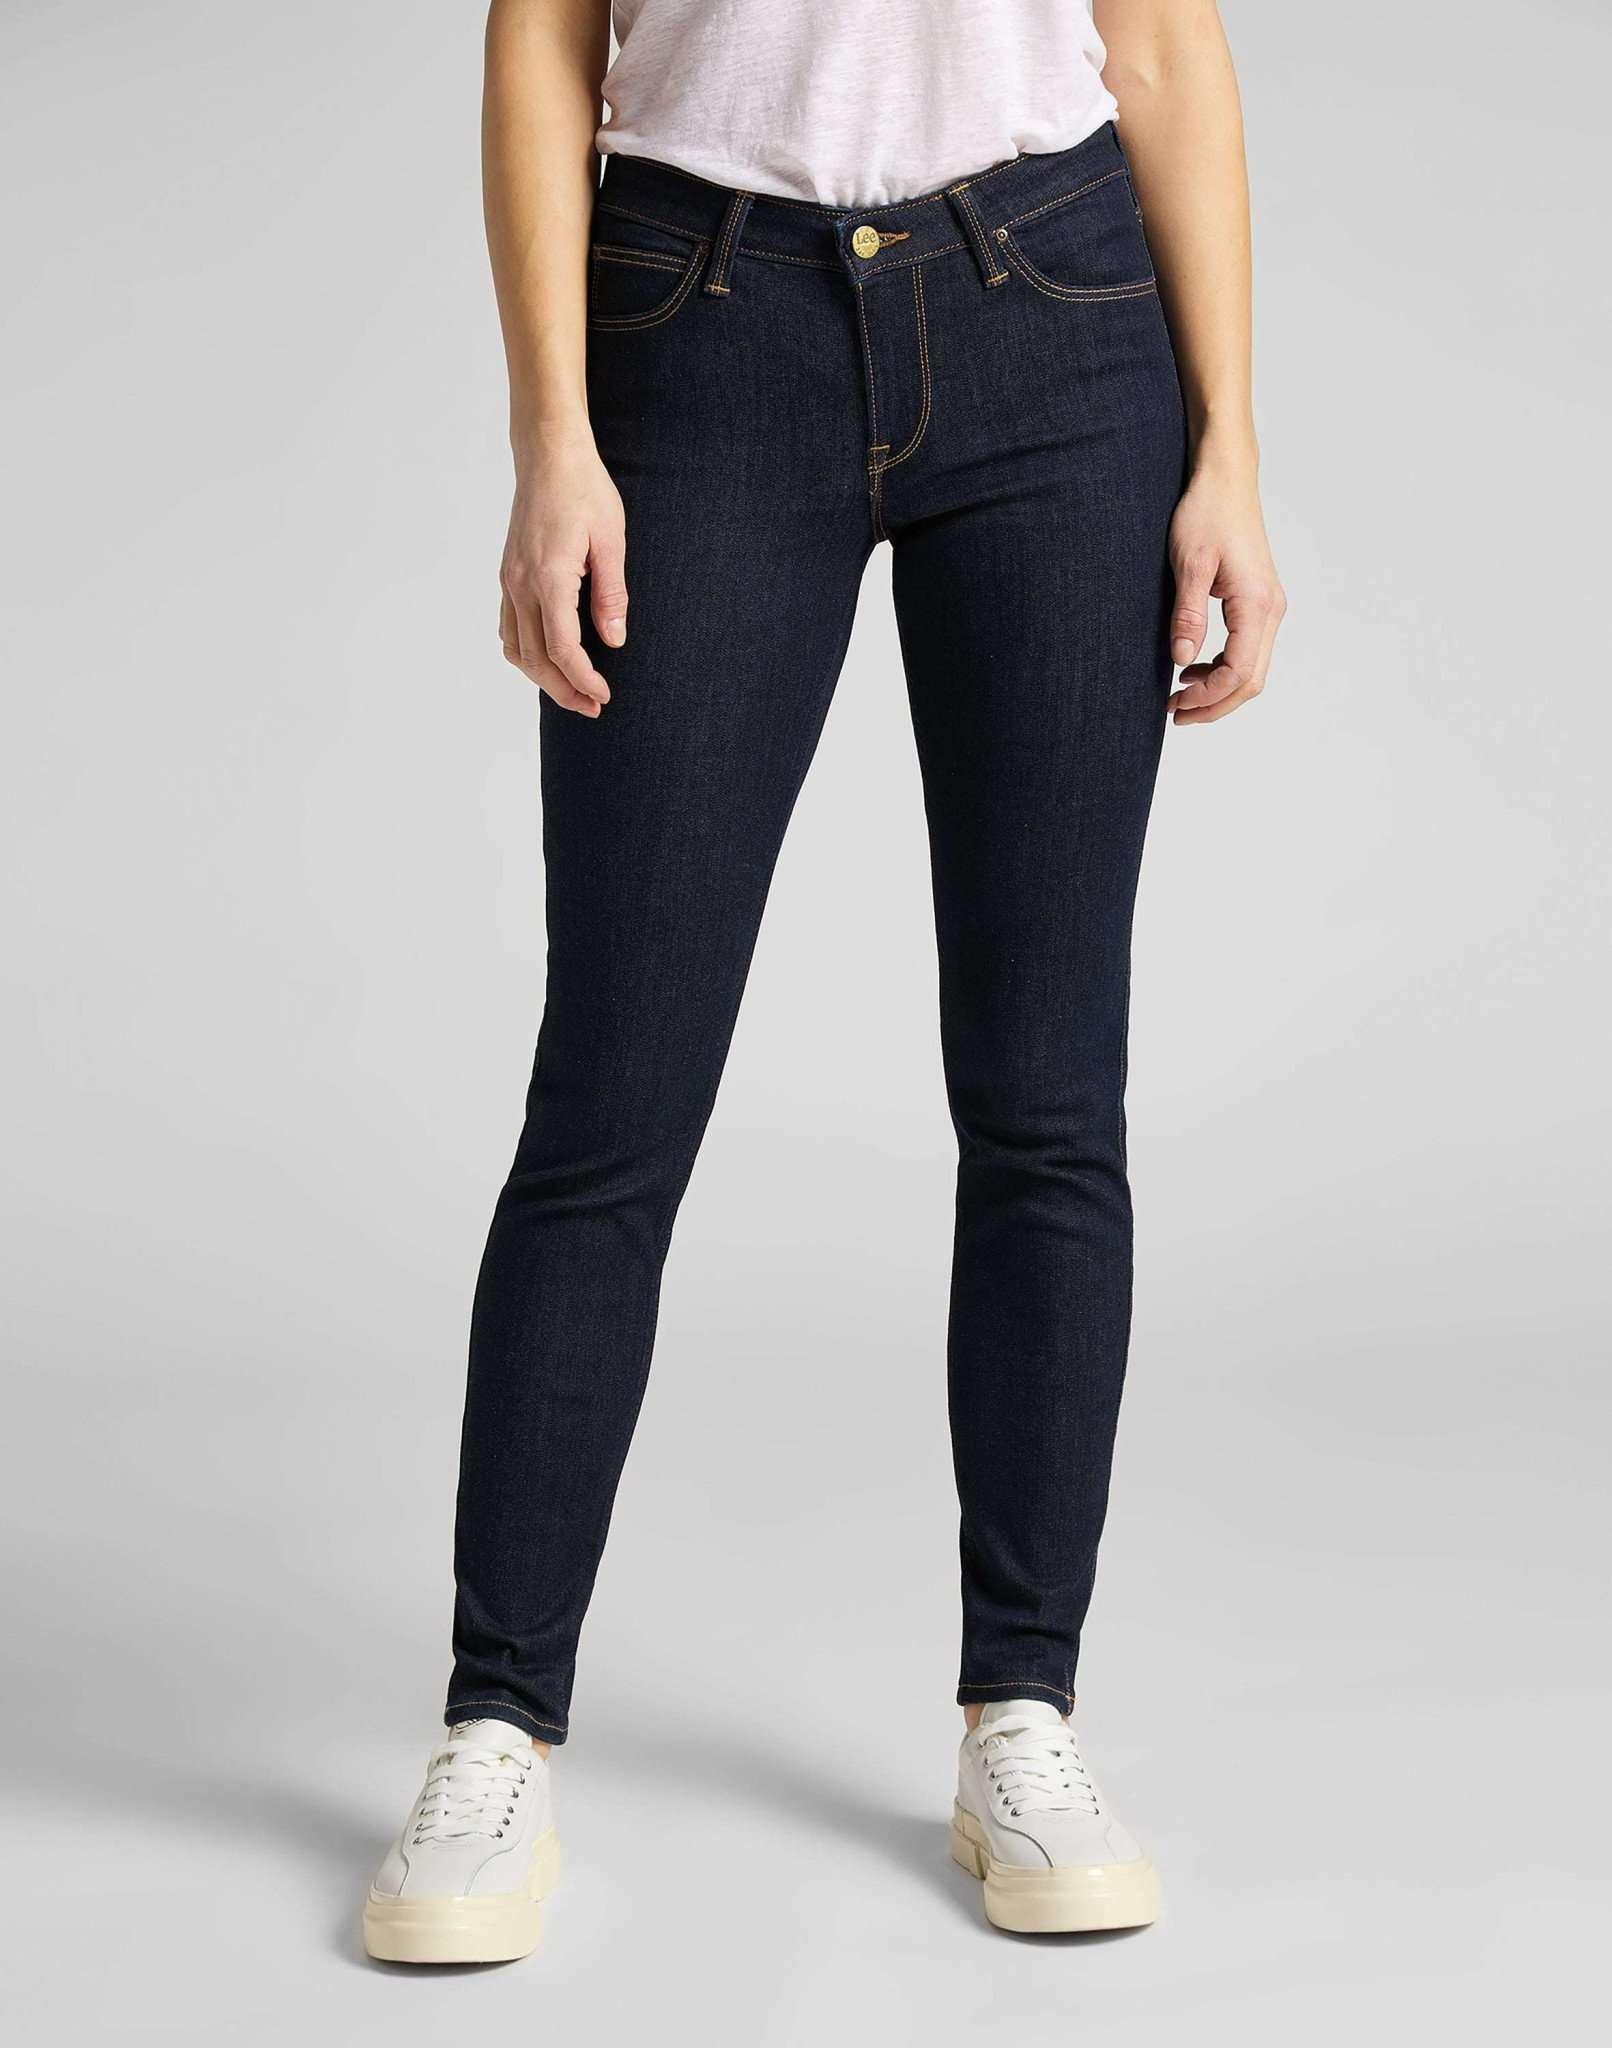 Jeans Skinny Fit Scarlett Damen Blau Denim L33/W30 von Lee